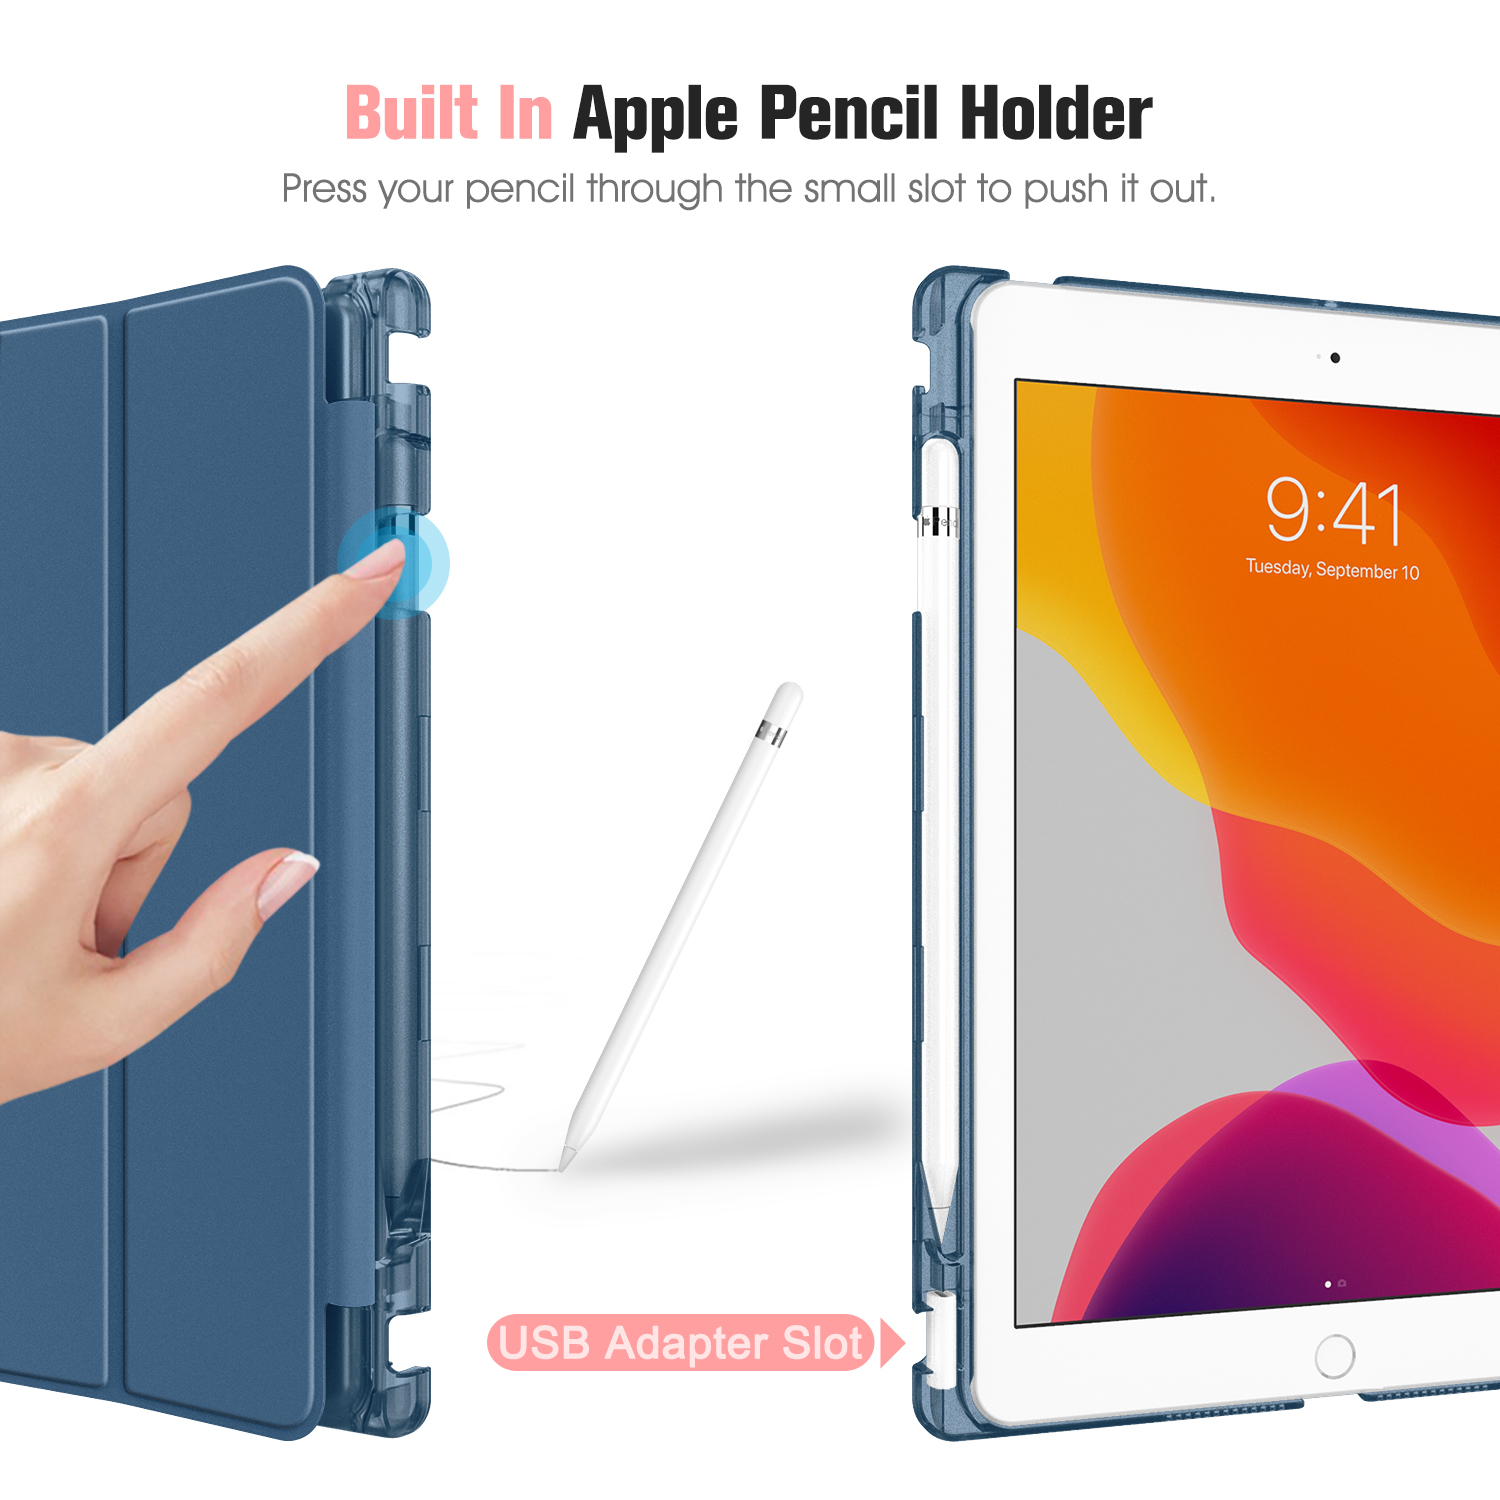 2021/2020/2019), 10.2 Zoll Bookcover, Marineblau (9/8/7 Generation FINTIE - iPad, Hülle, iPad